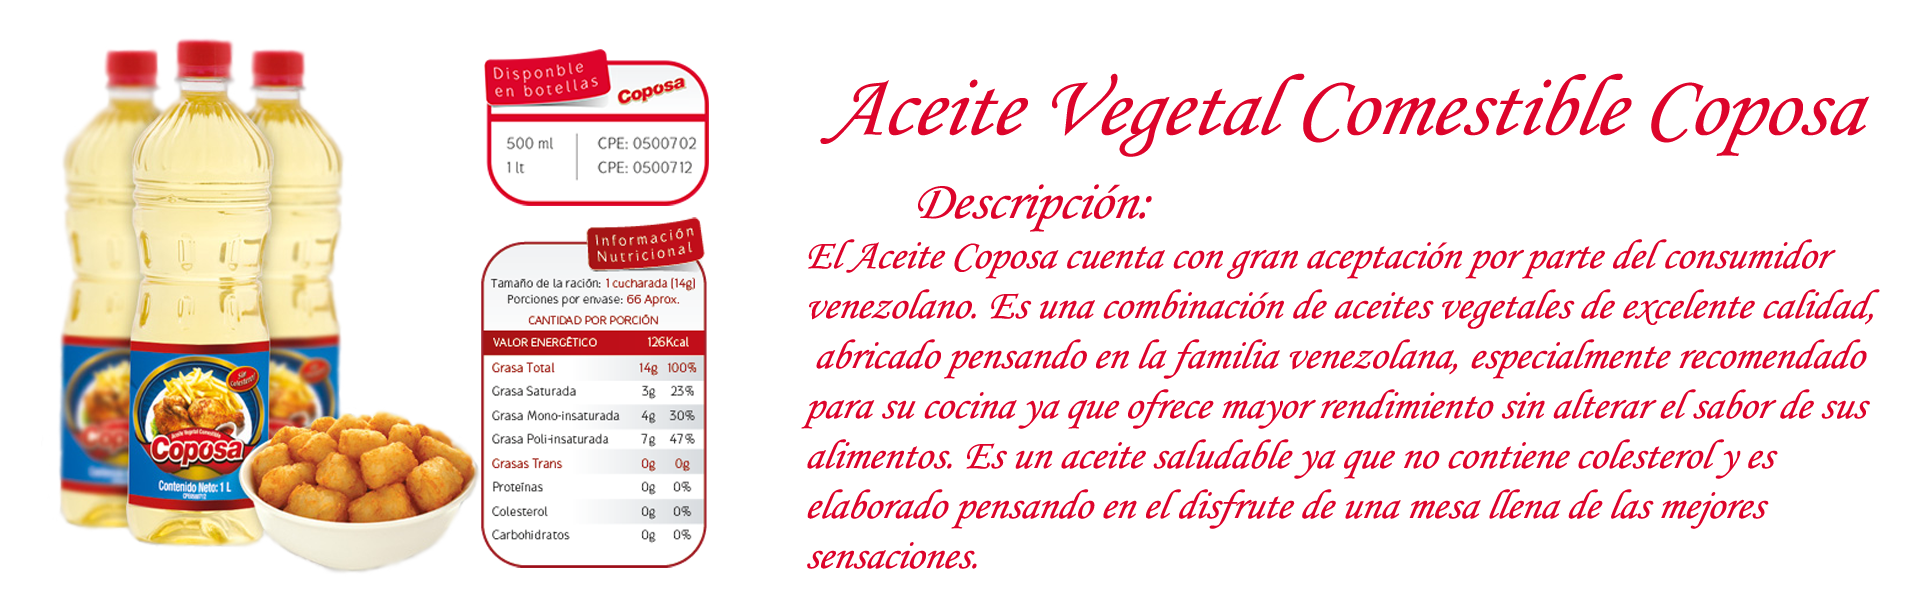 Aceite Vegetal Comestible Coposa